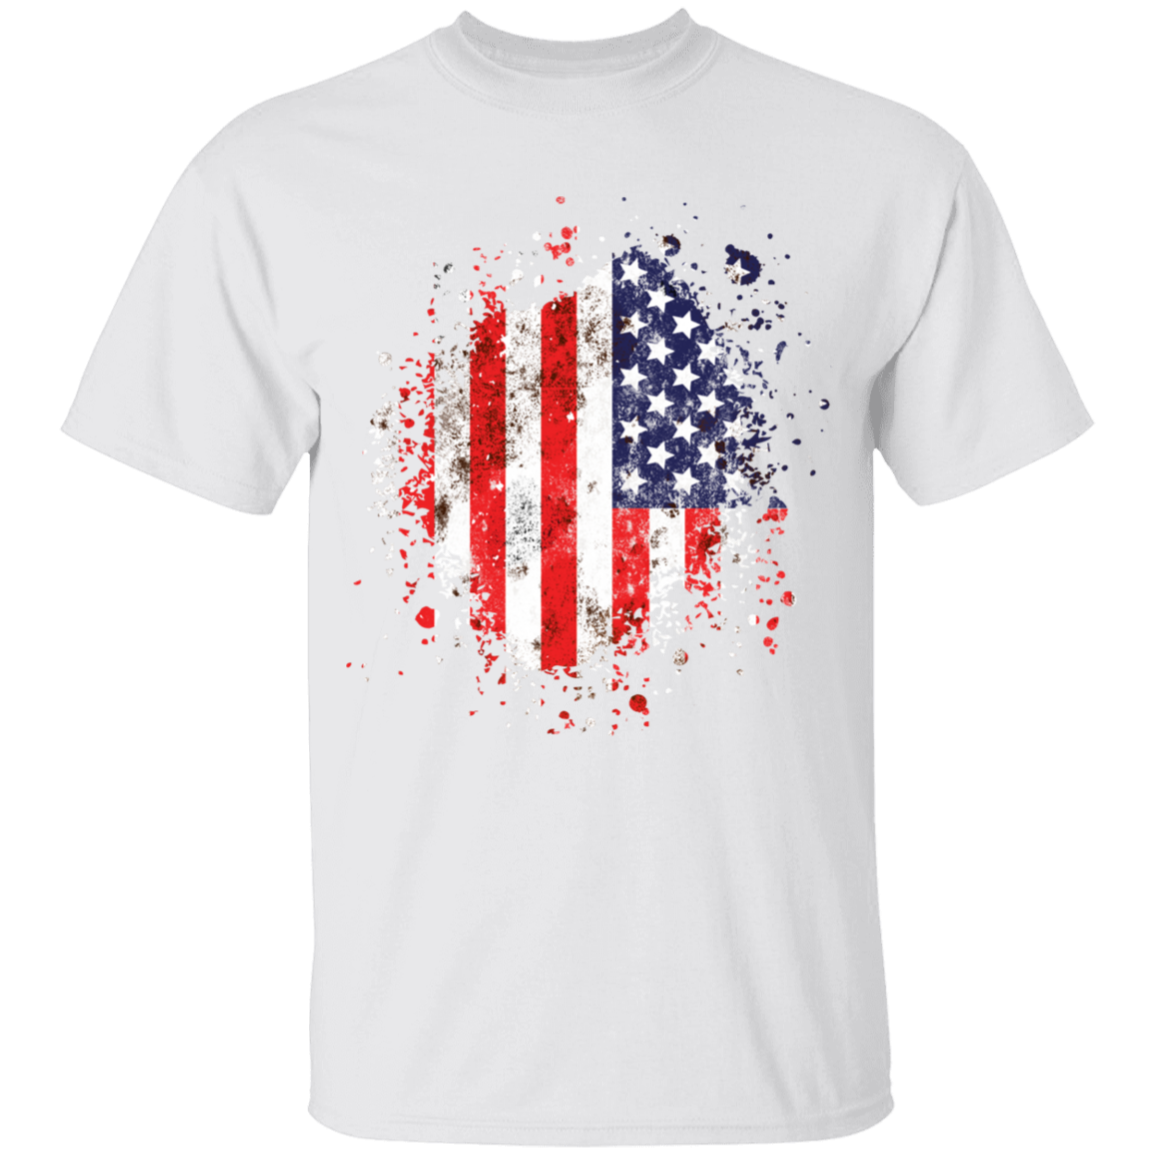 American Flag - Boys, Teen, Youth T-Shirt